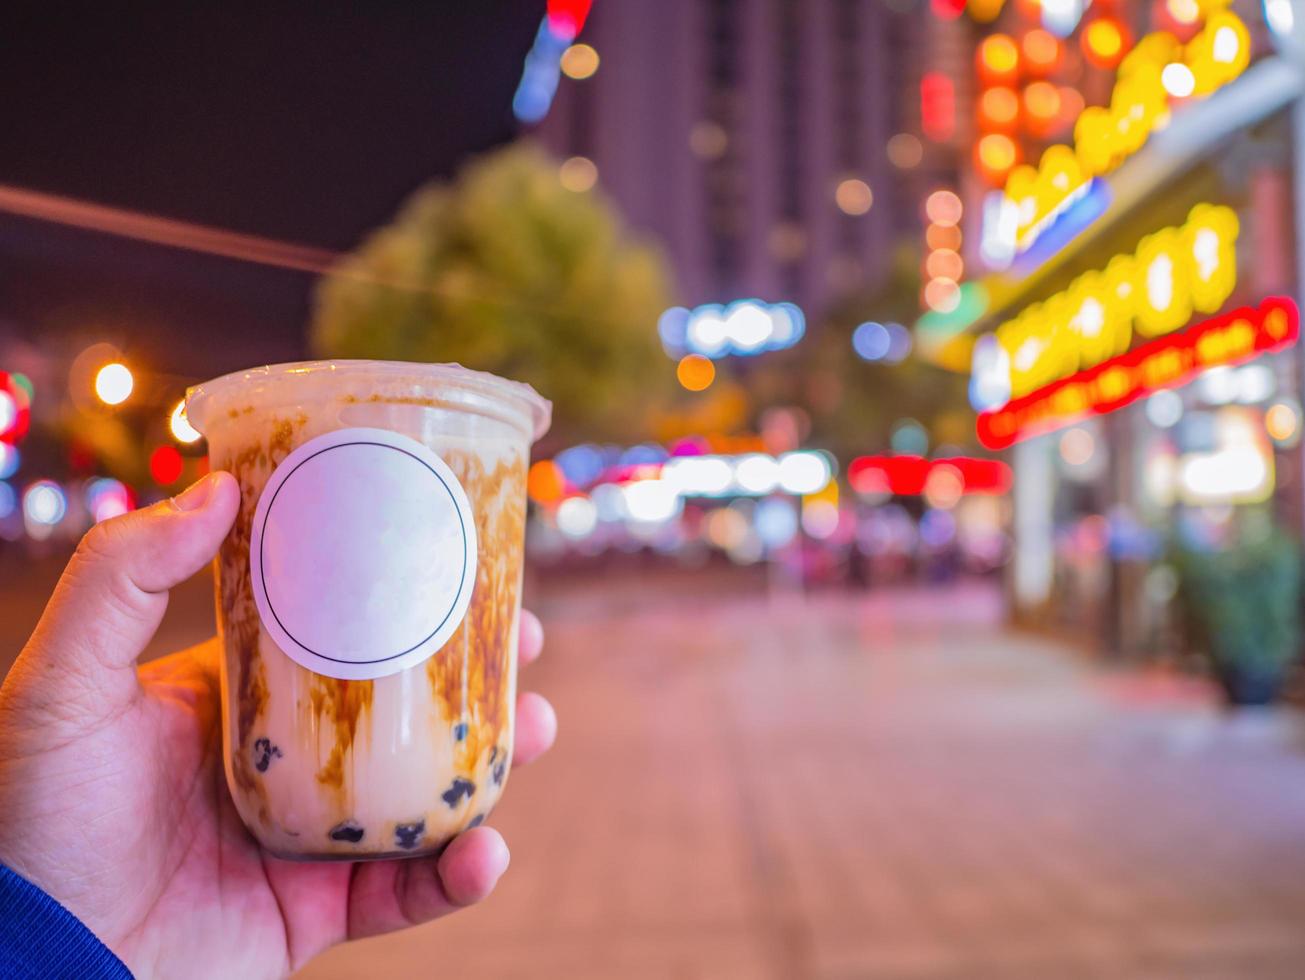 Bubble milk tea with Dark sugar mix in the milk tea in the Tourist hand at zhangjiajie city China photo